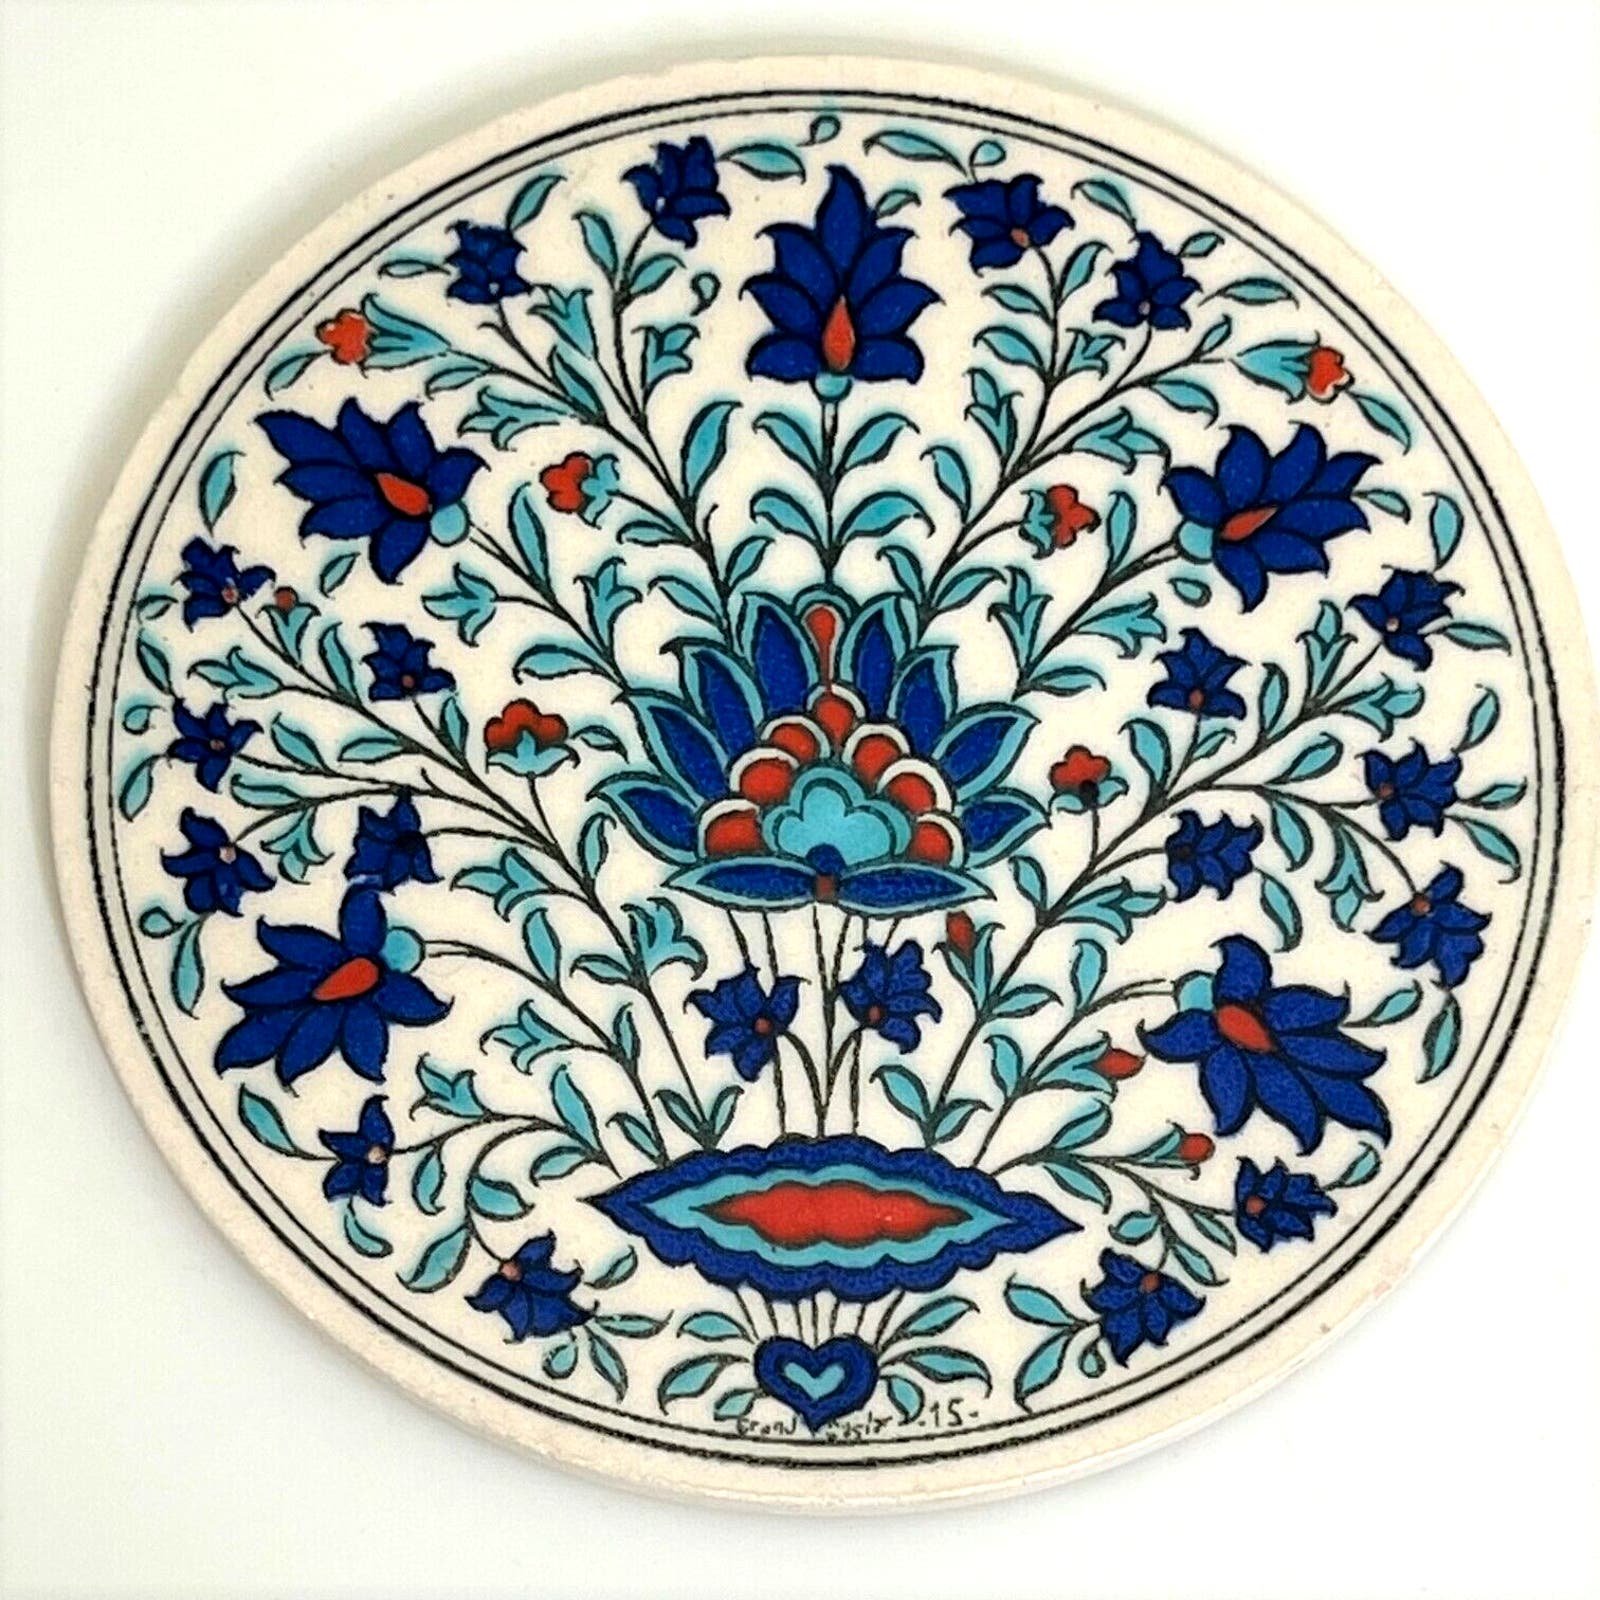 Turkey Grand Caglar Glazed Pottery Round Trivet Tile Blue Red Floral Motif DKGo5vqYC